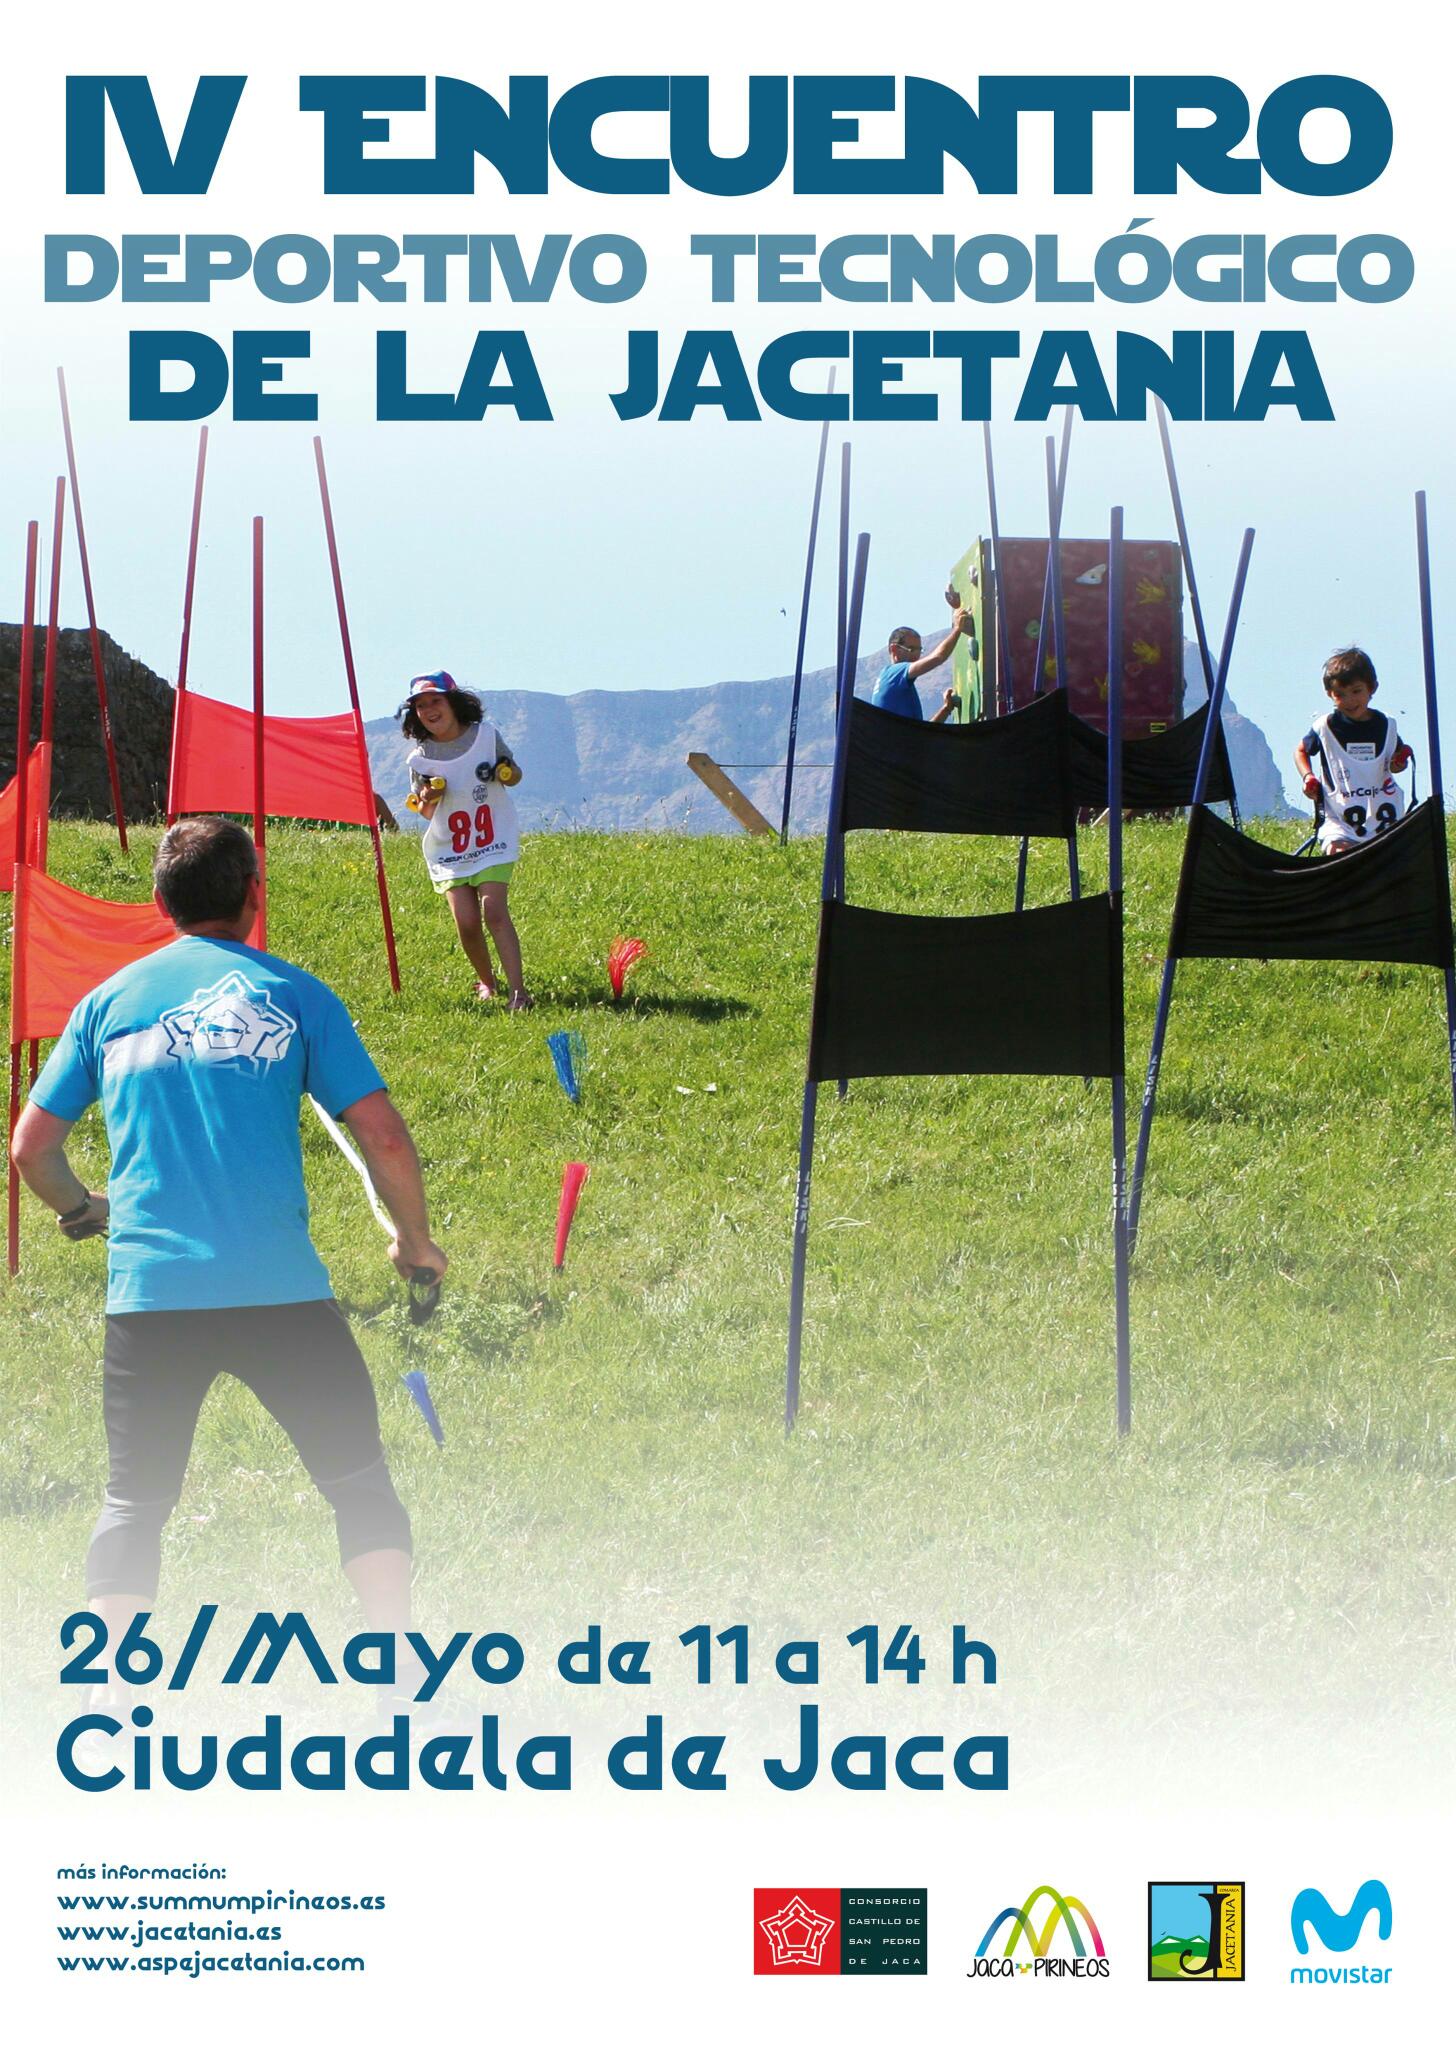 IV Encuentro Deportivo Tecnolgico de la Jacetania